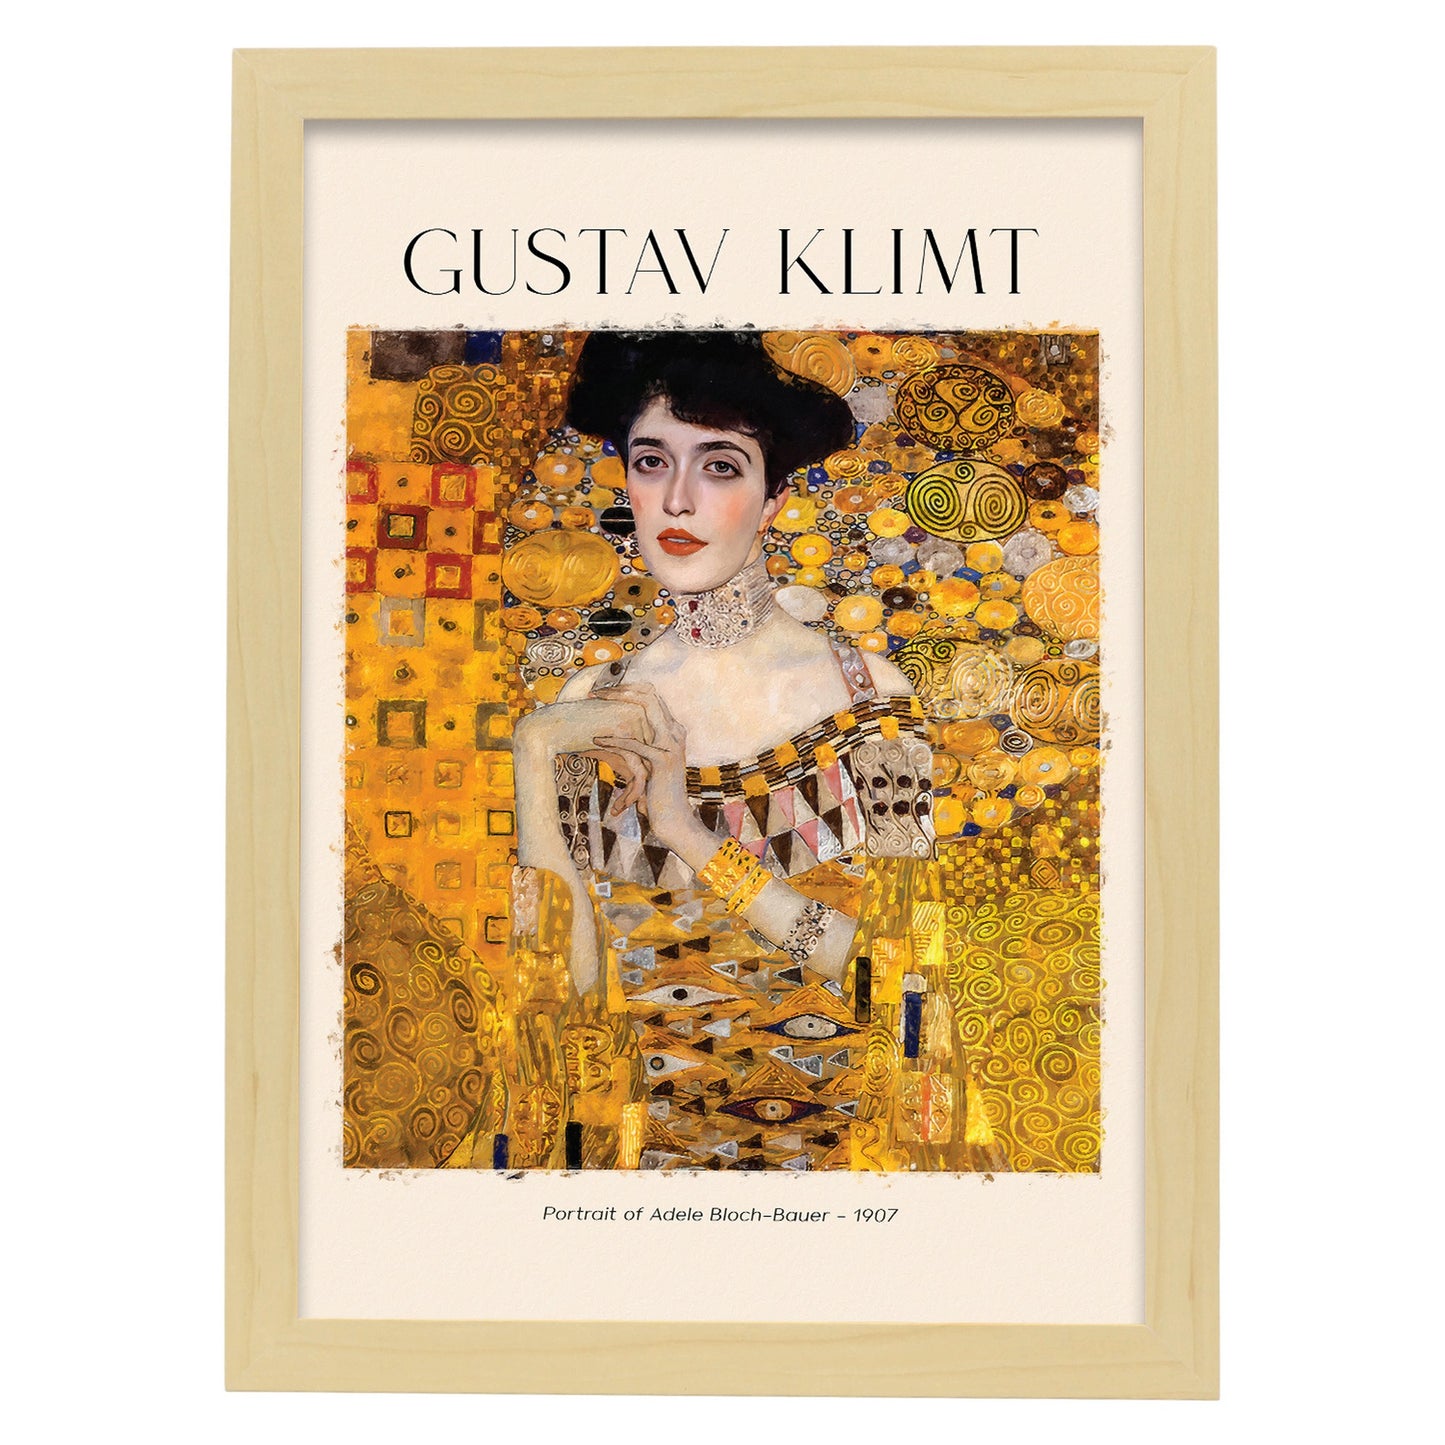 Lámina inspirada en Gustav Klimt del Retrato de Adele